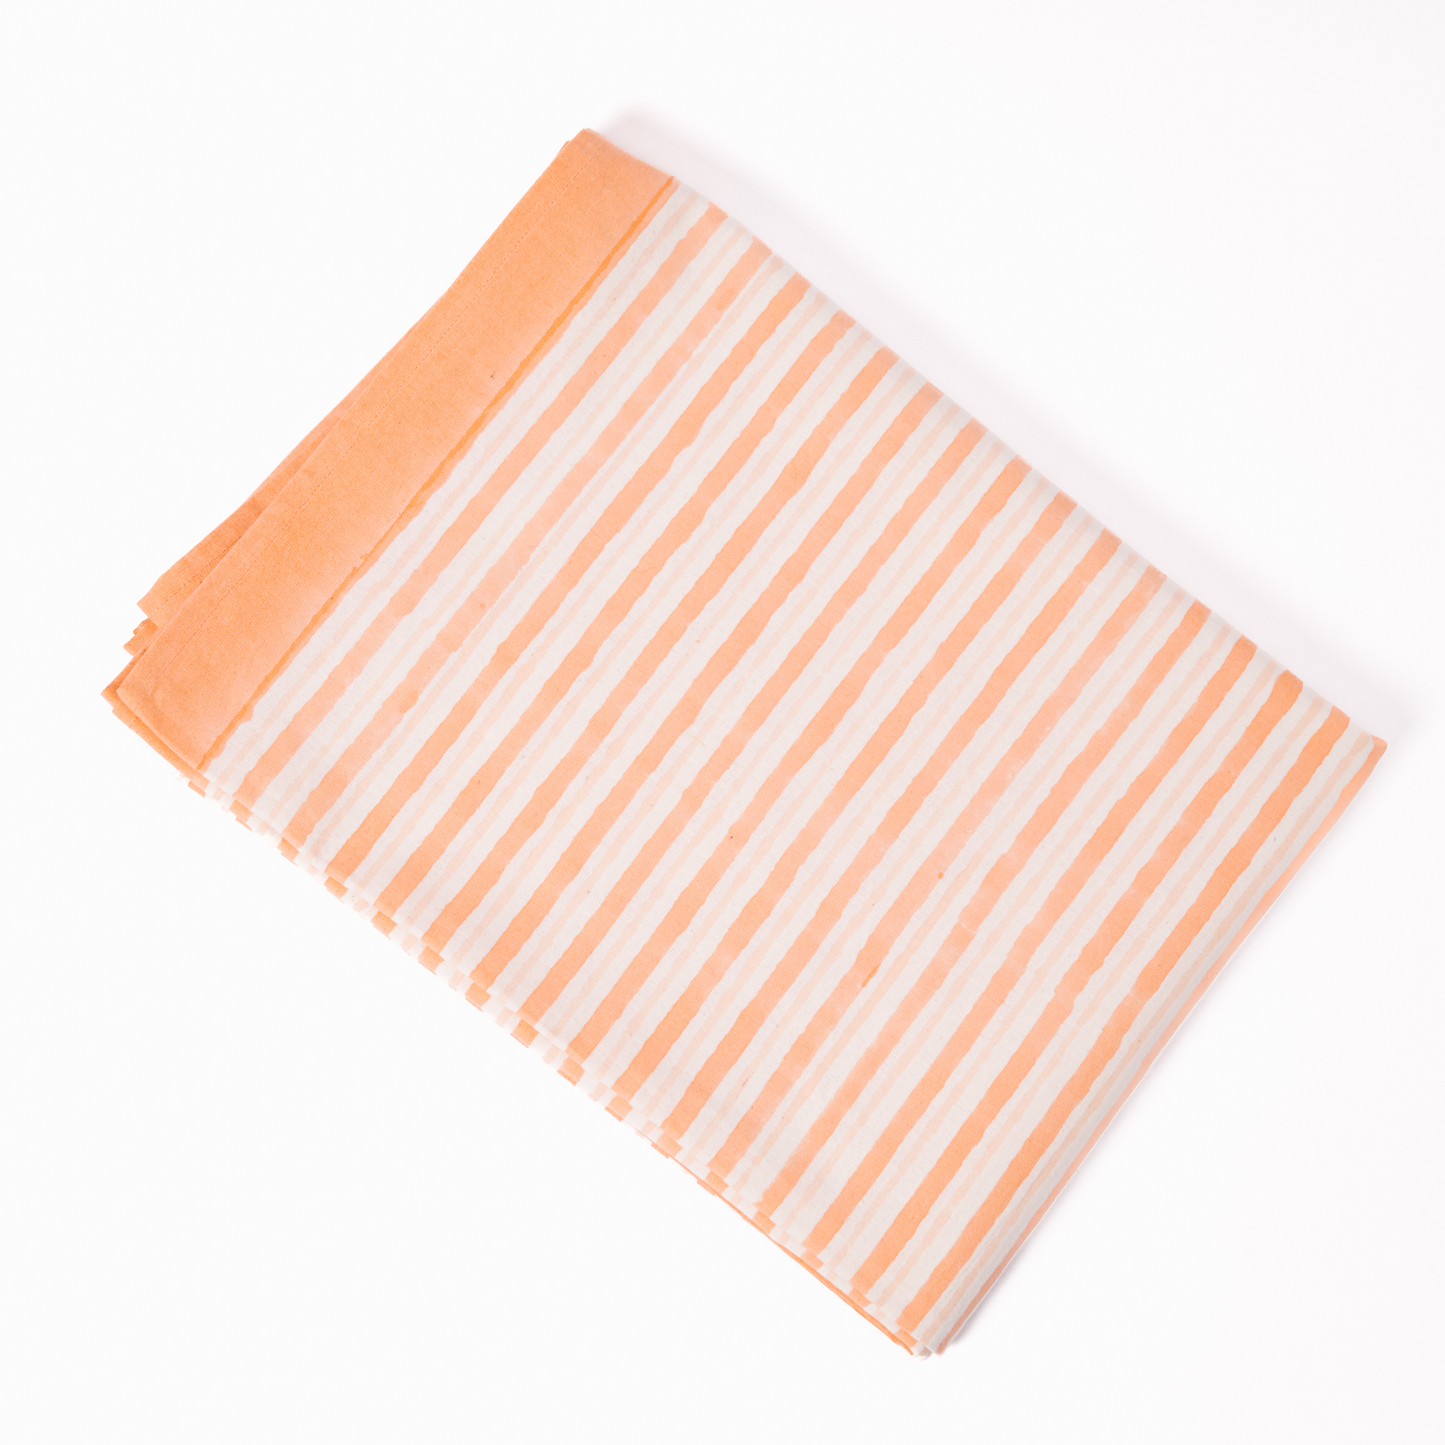 Apricot Stripe Tablecloth